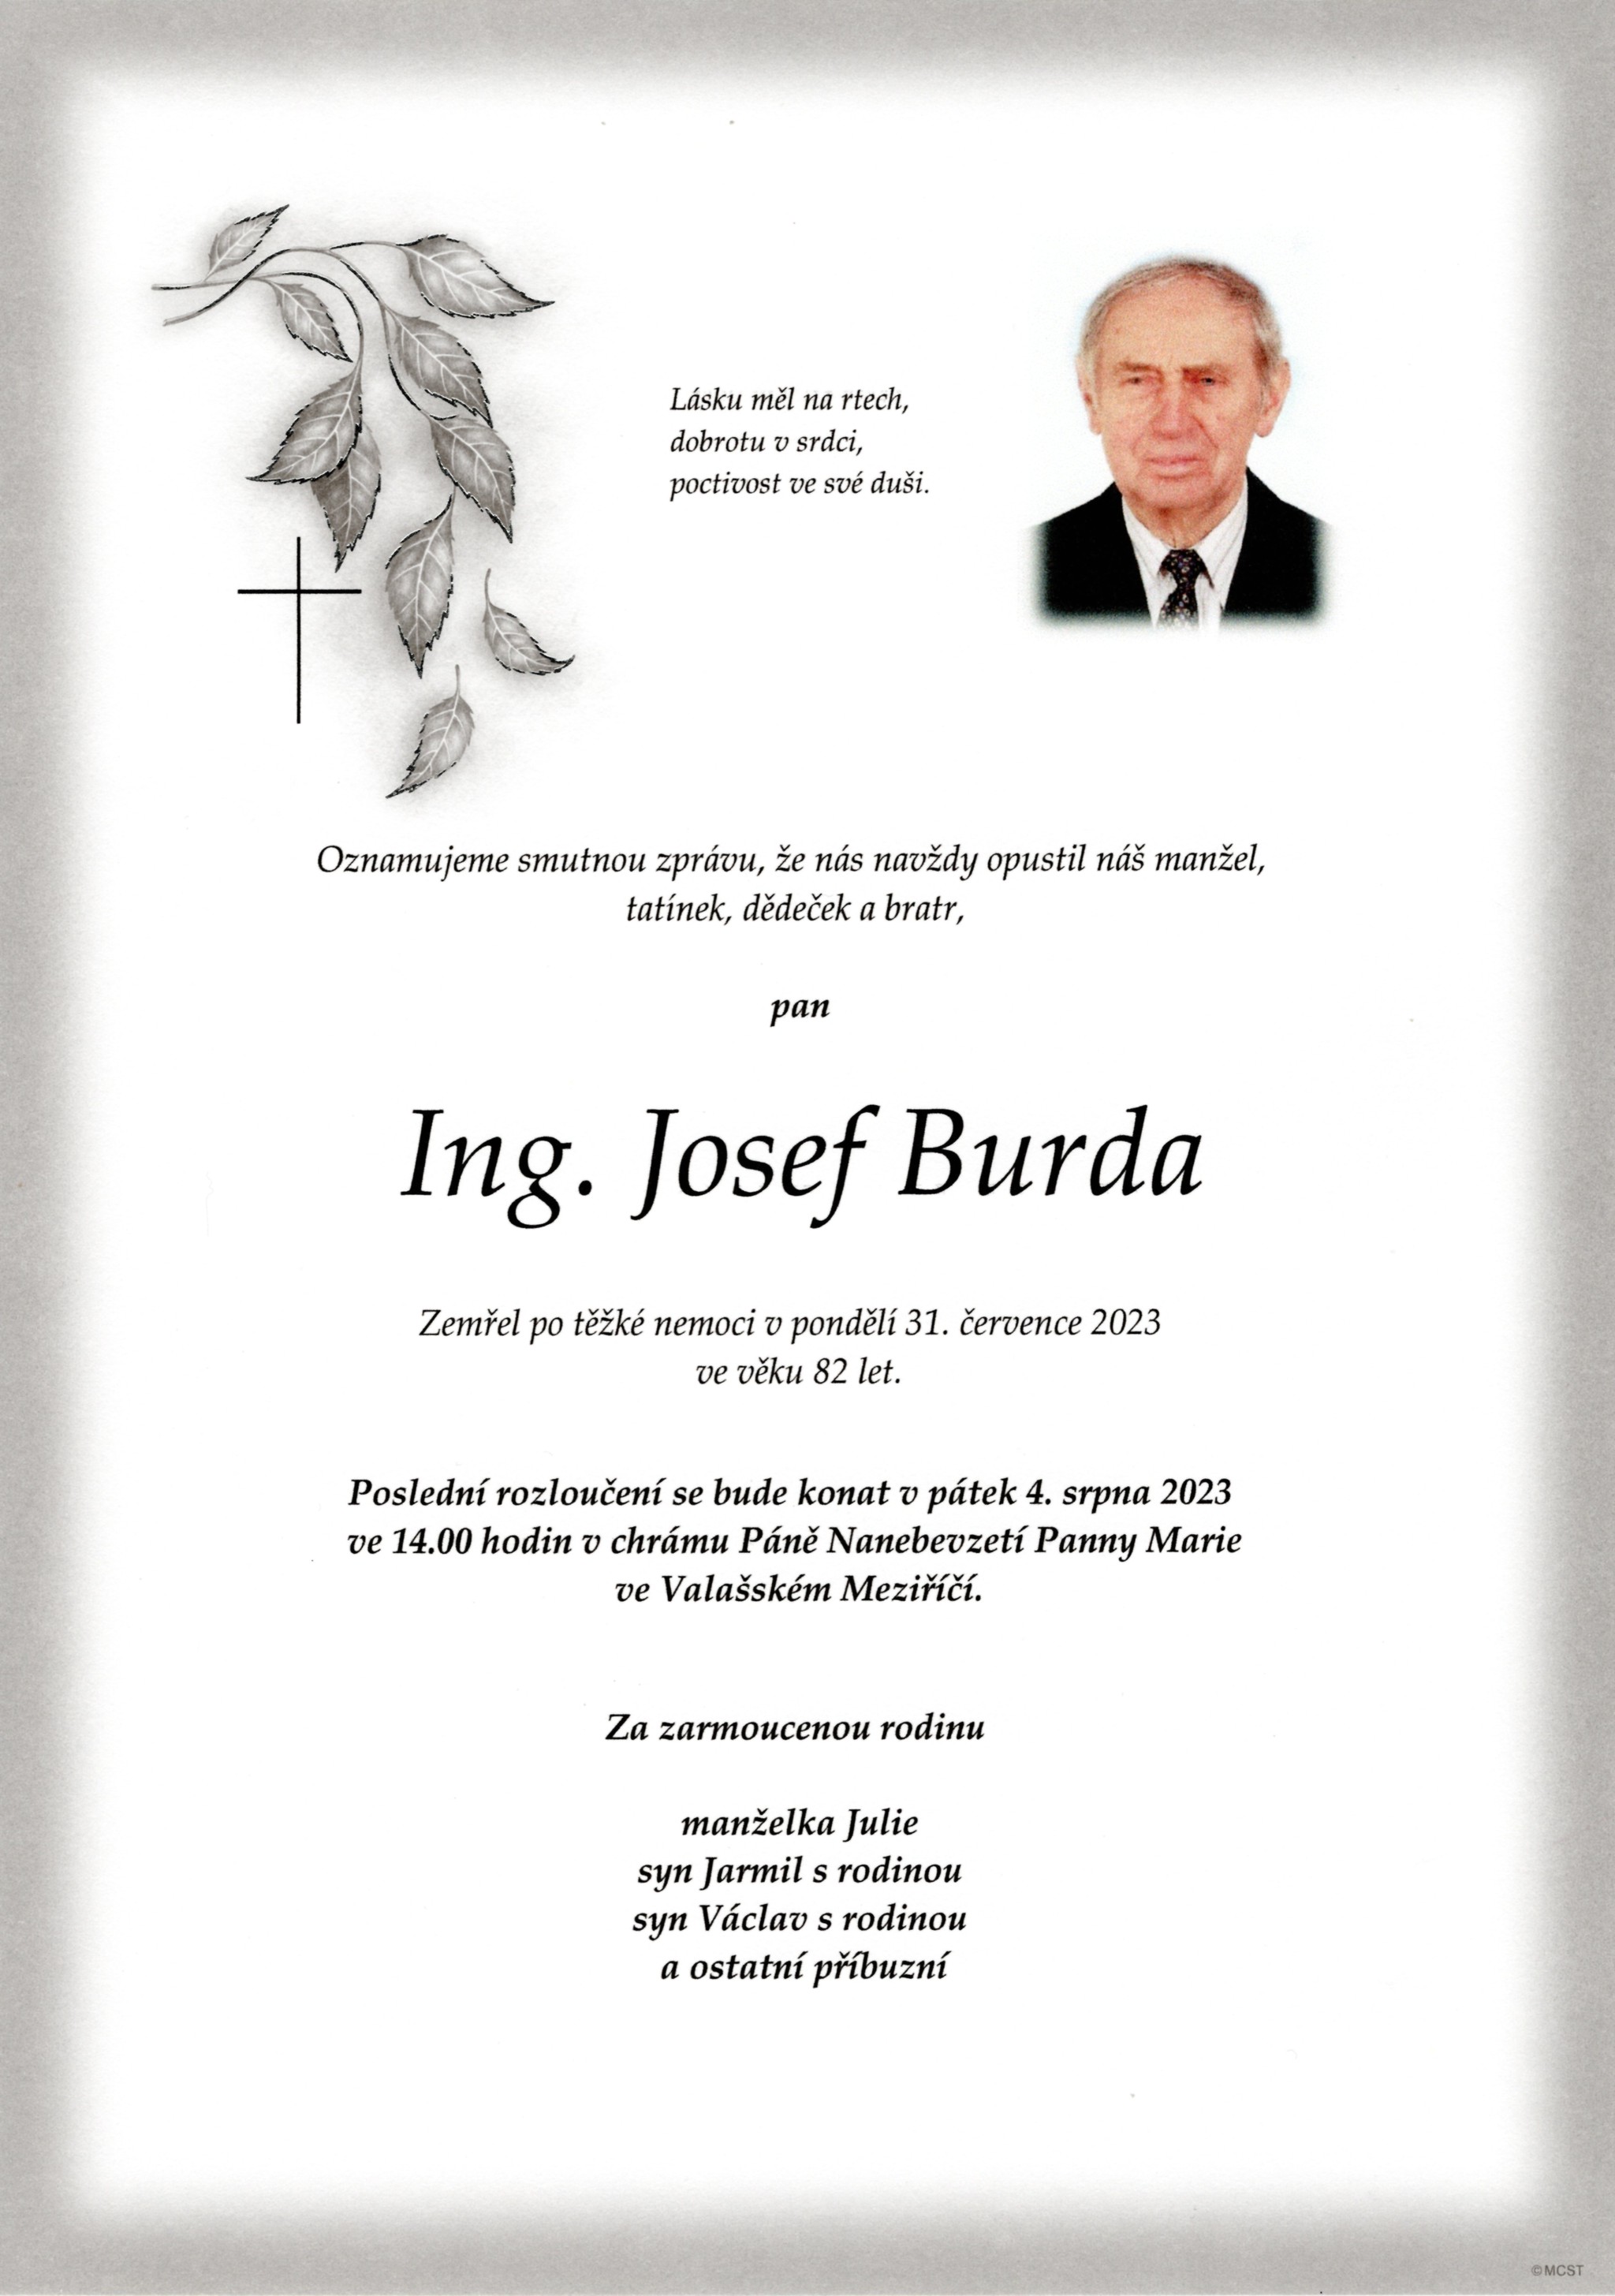 Ing. Josef Burda